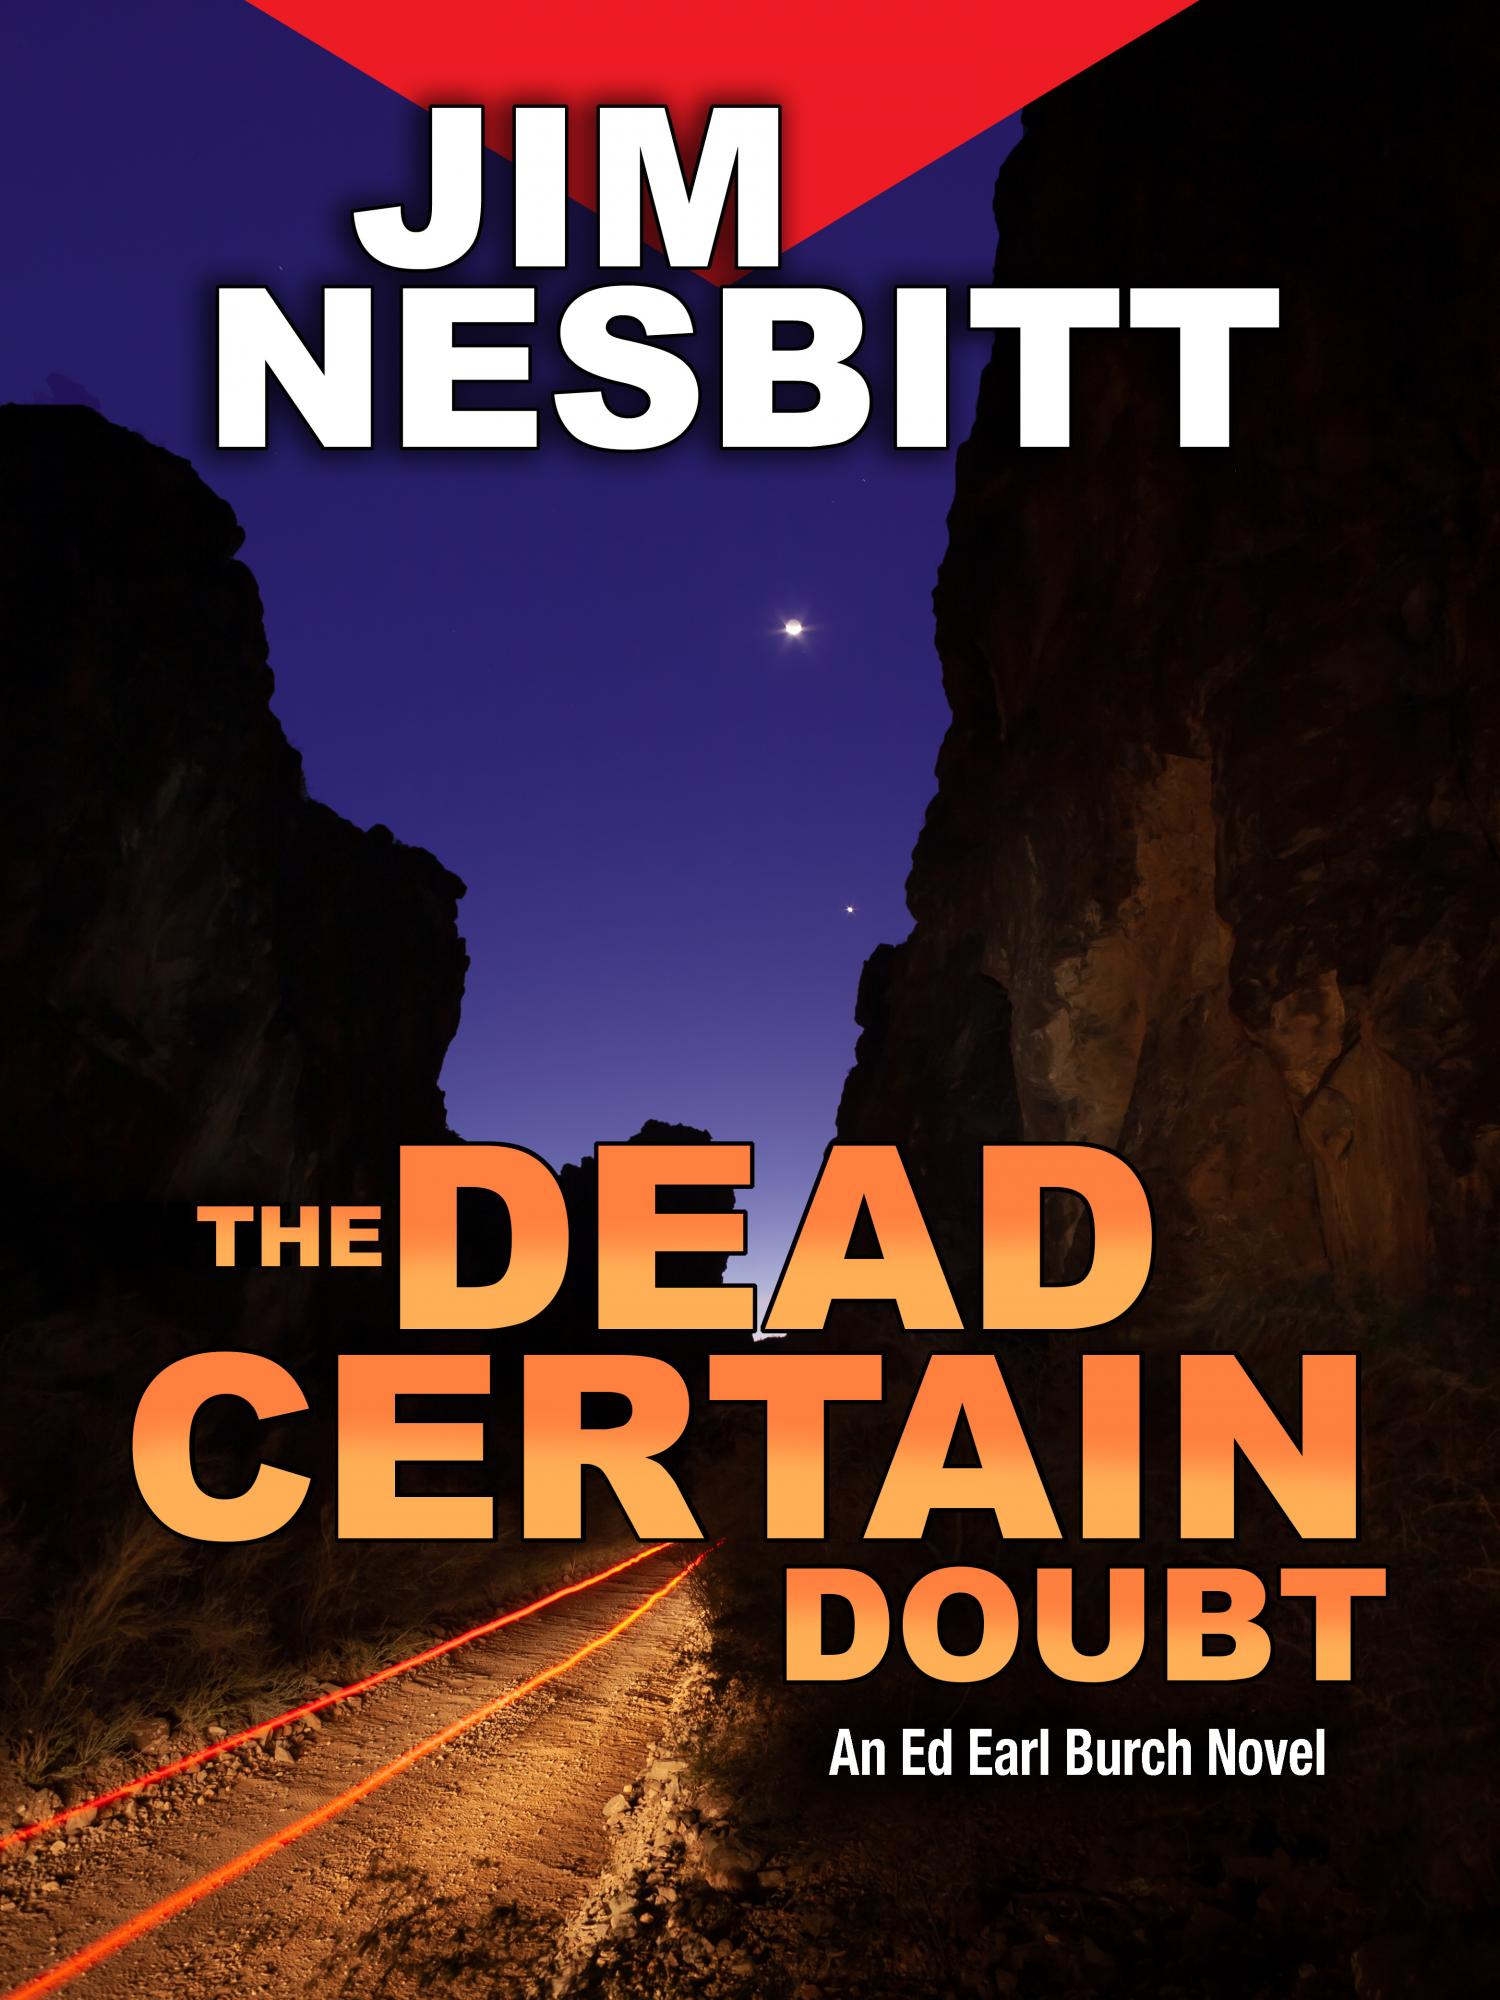 The Dead Certain Doubt by Jim Nesbitt